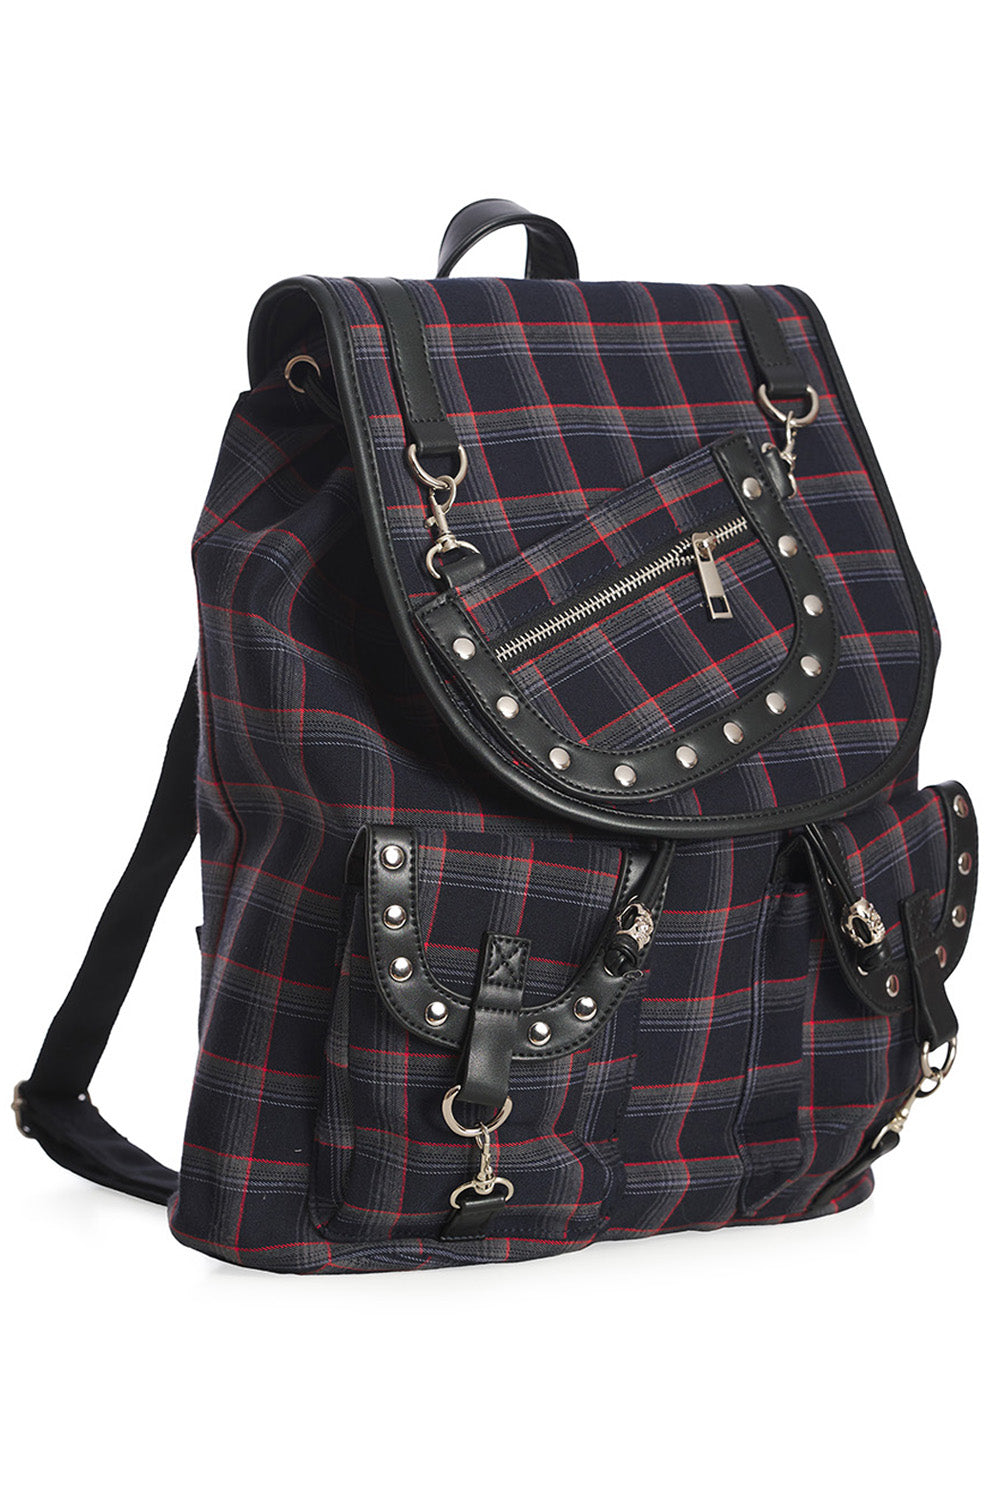 Lost Queen Yamy Tartan  Knapsack Plaid Punk Emo Handbag Backpack